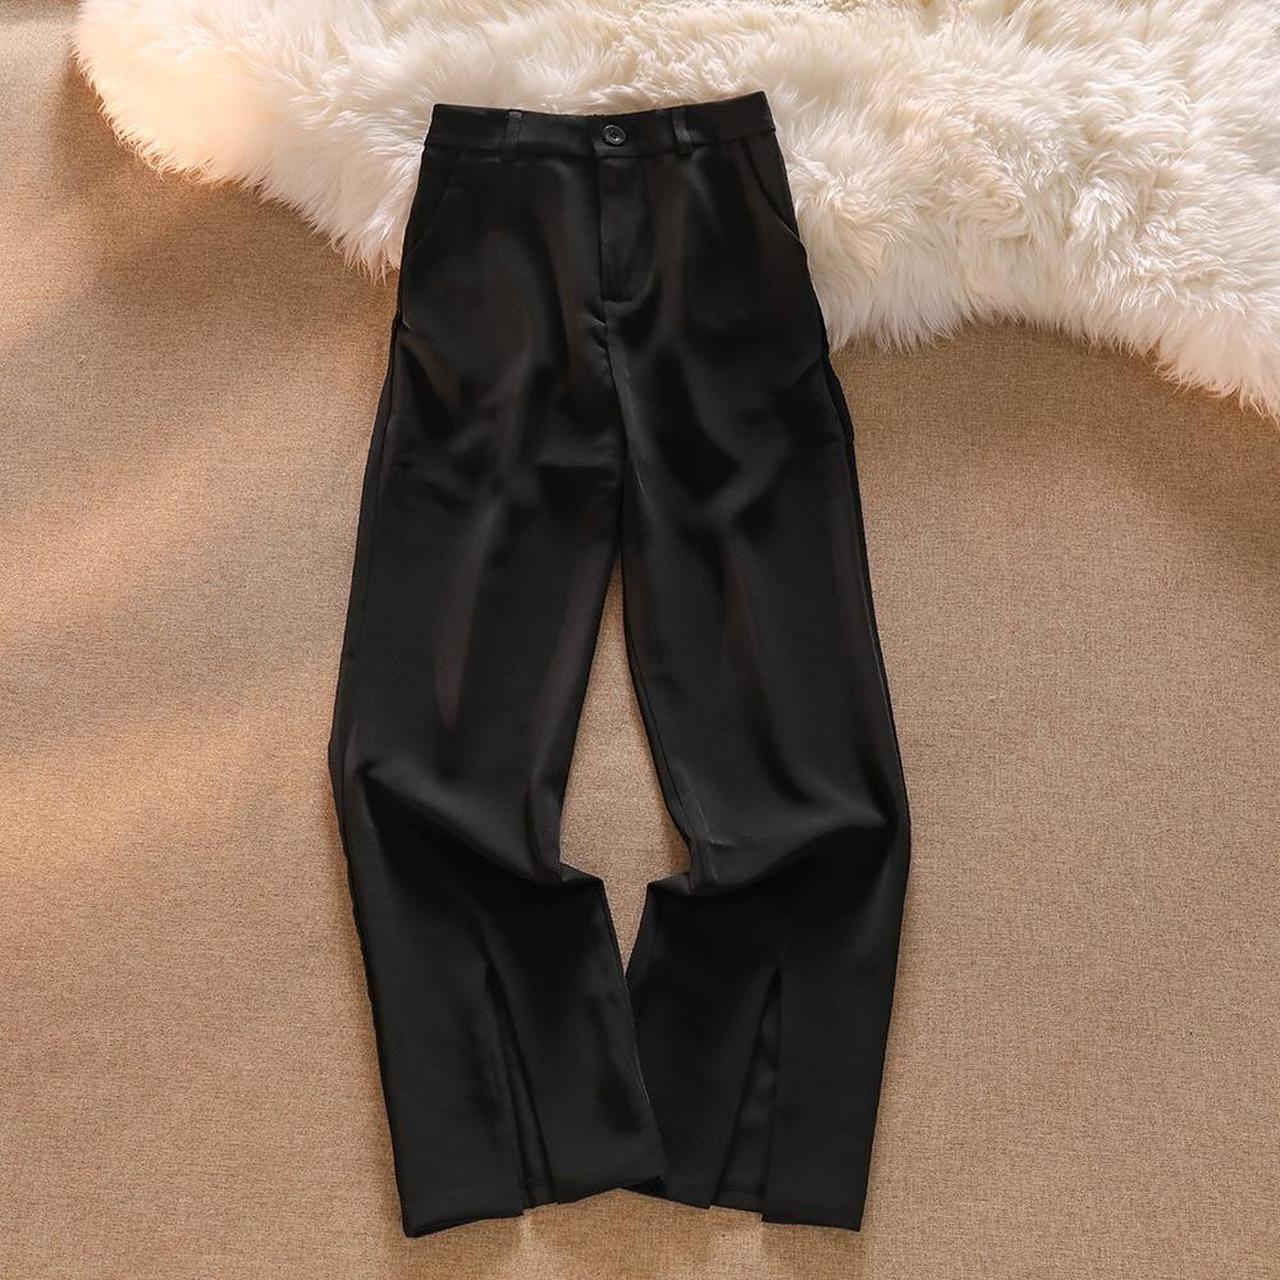 Black Slit Elastic High Waisted Trousers Soft... - Depop